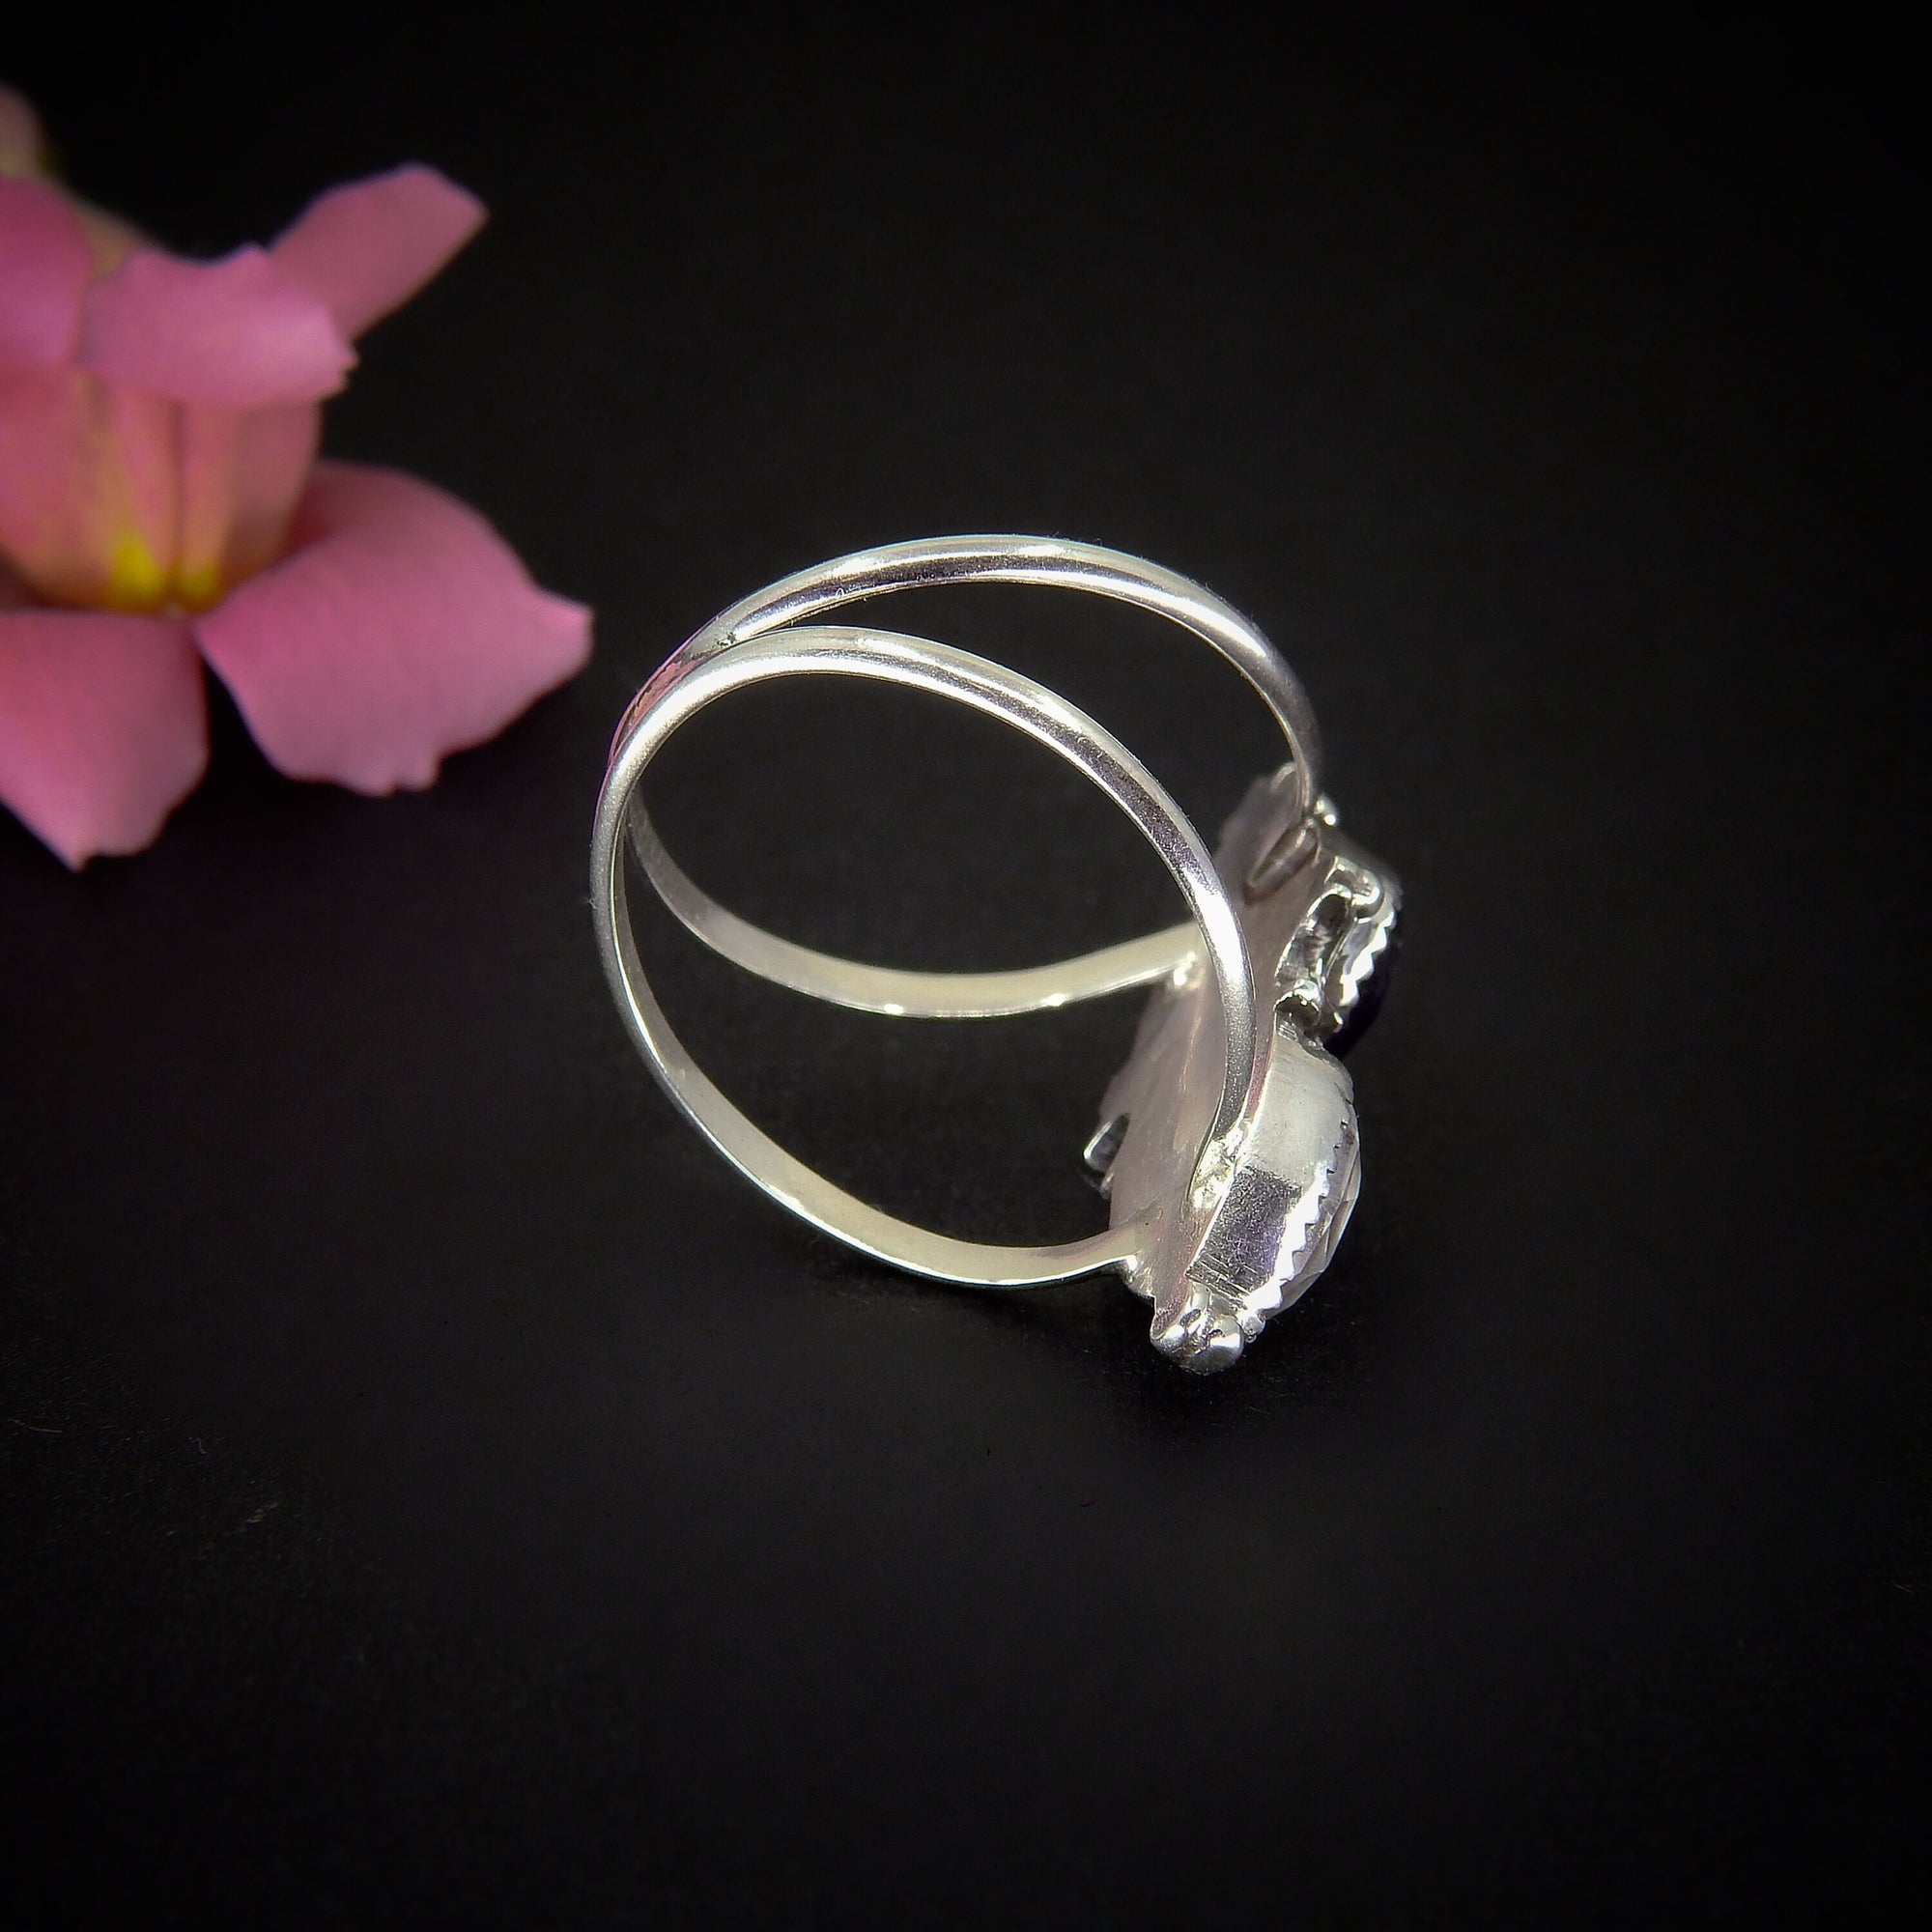 Rose Cut Amethyst & Angel Aura Quartz Ring - Size 10 1/4 - Sterling Silver - Amethyst Ring - Moon Ring - Star Jewellery - Faceted Amethyst